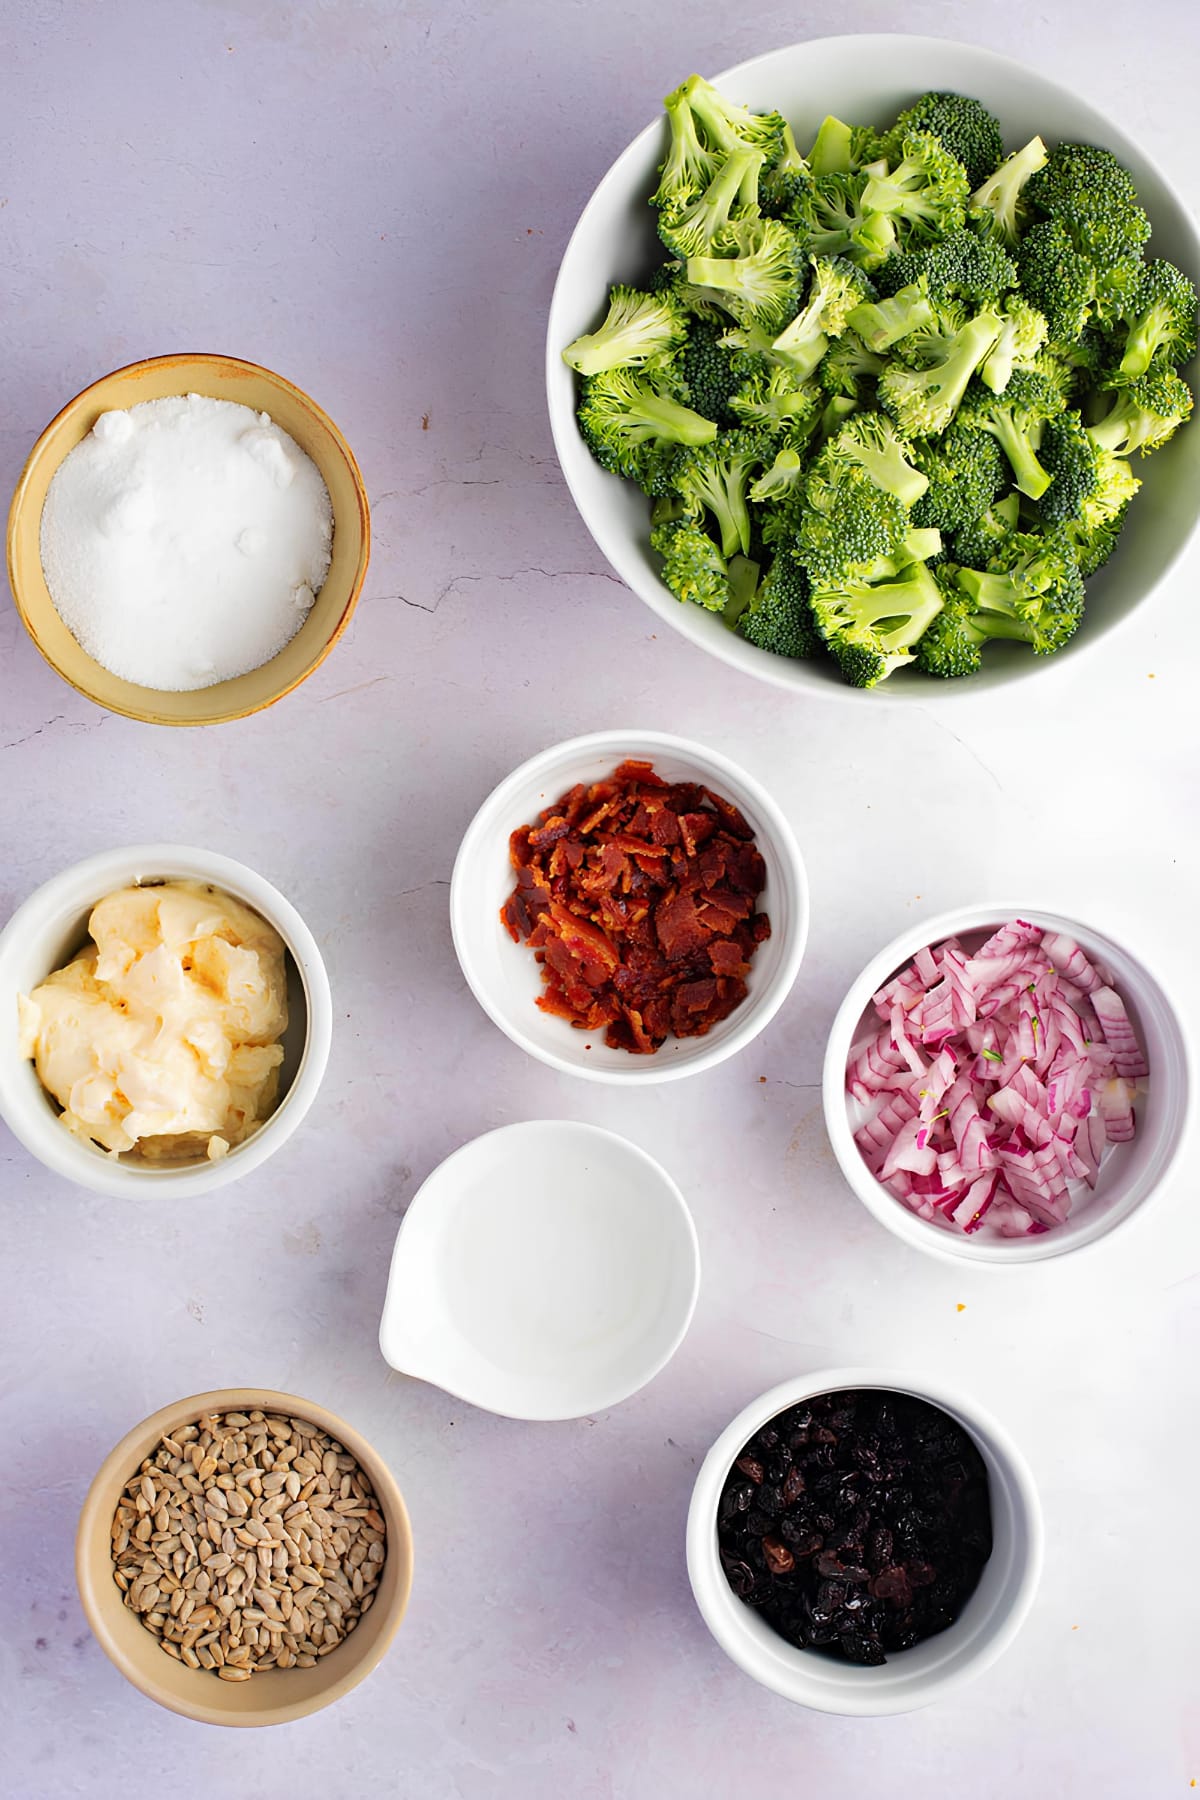 Ingredients for Broccoli Raisin Salad: Bacon, Broccoli, Red Onions, Raisins, Mayonnaise and Sunflower Seeds